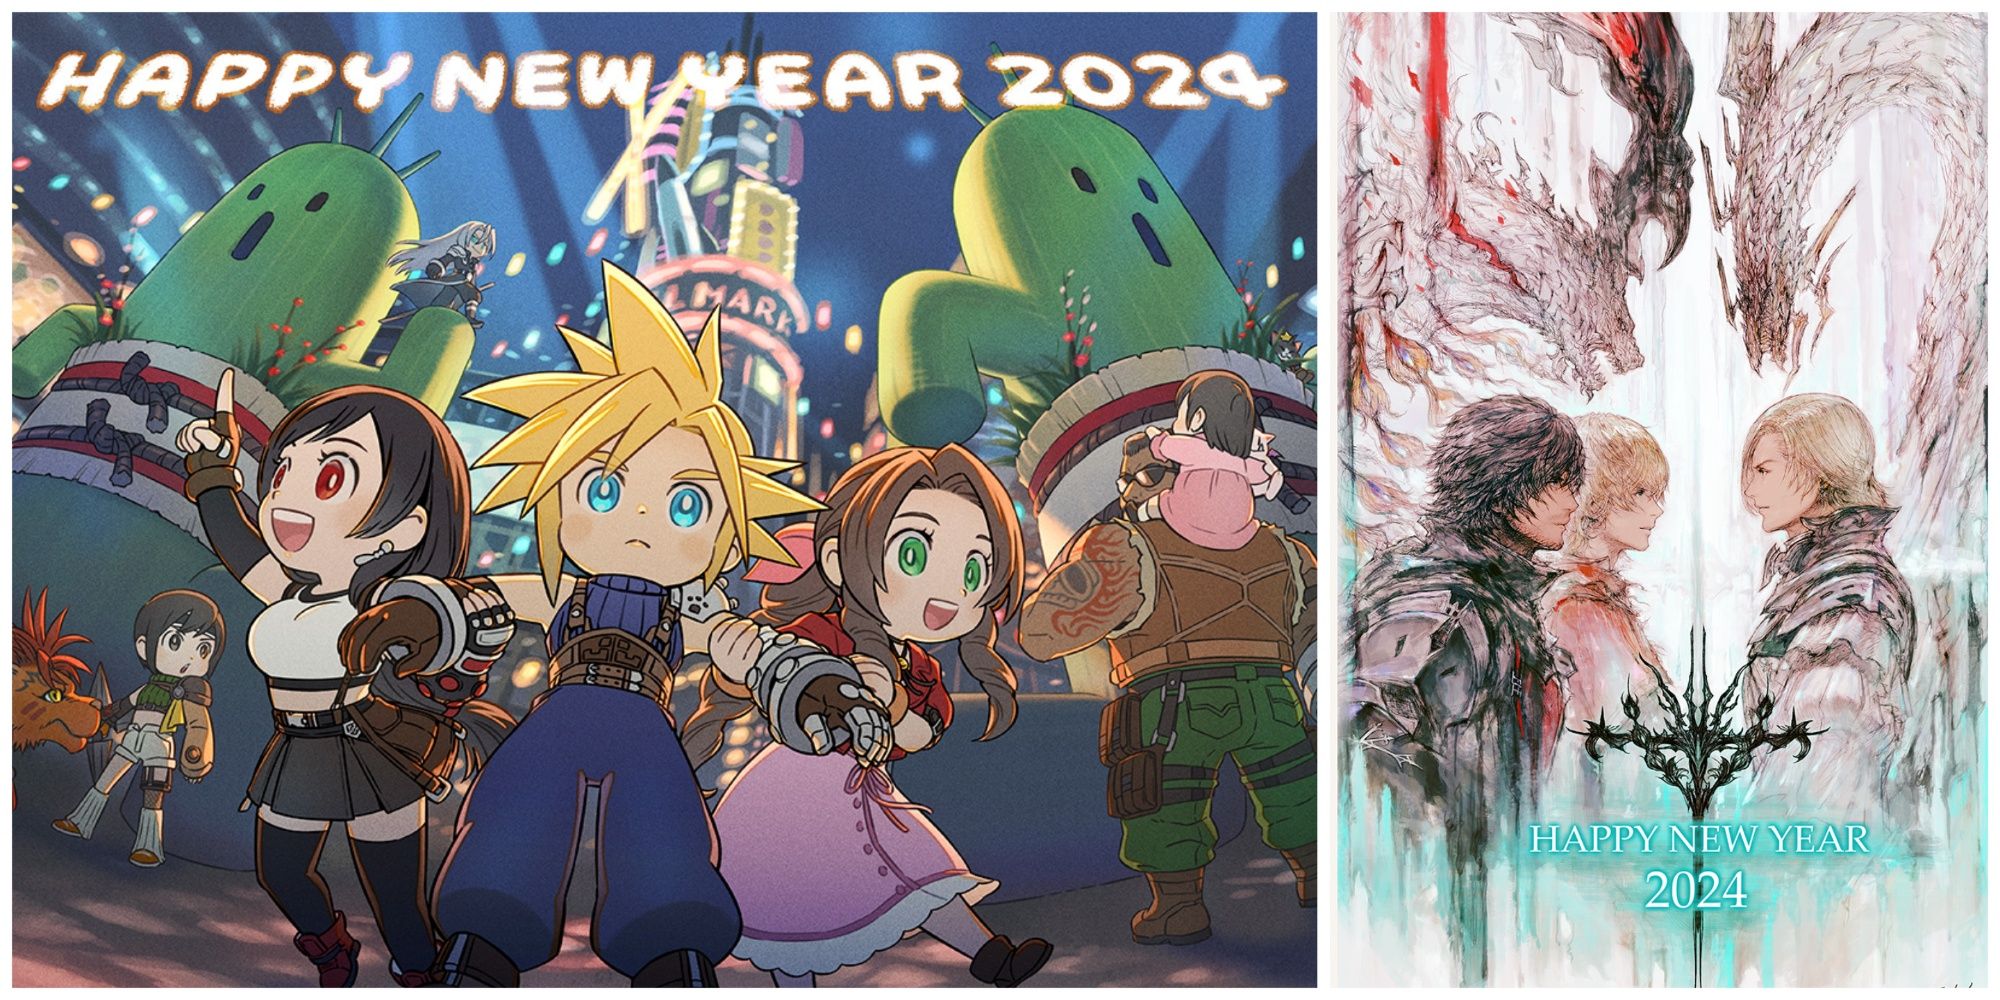 A Square Enixnek nagy tervei vannak a Final Fantasy-val 2024-ben